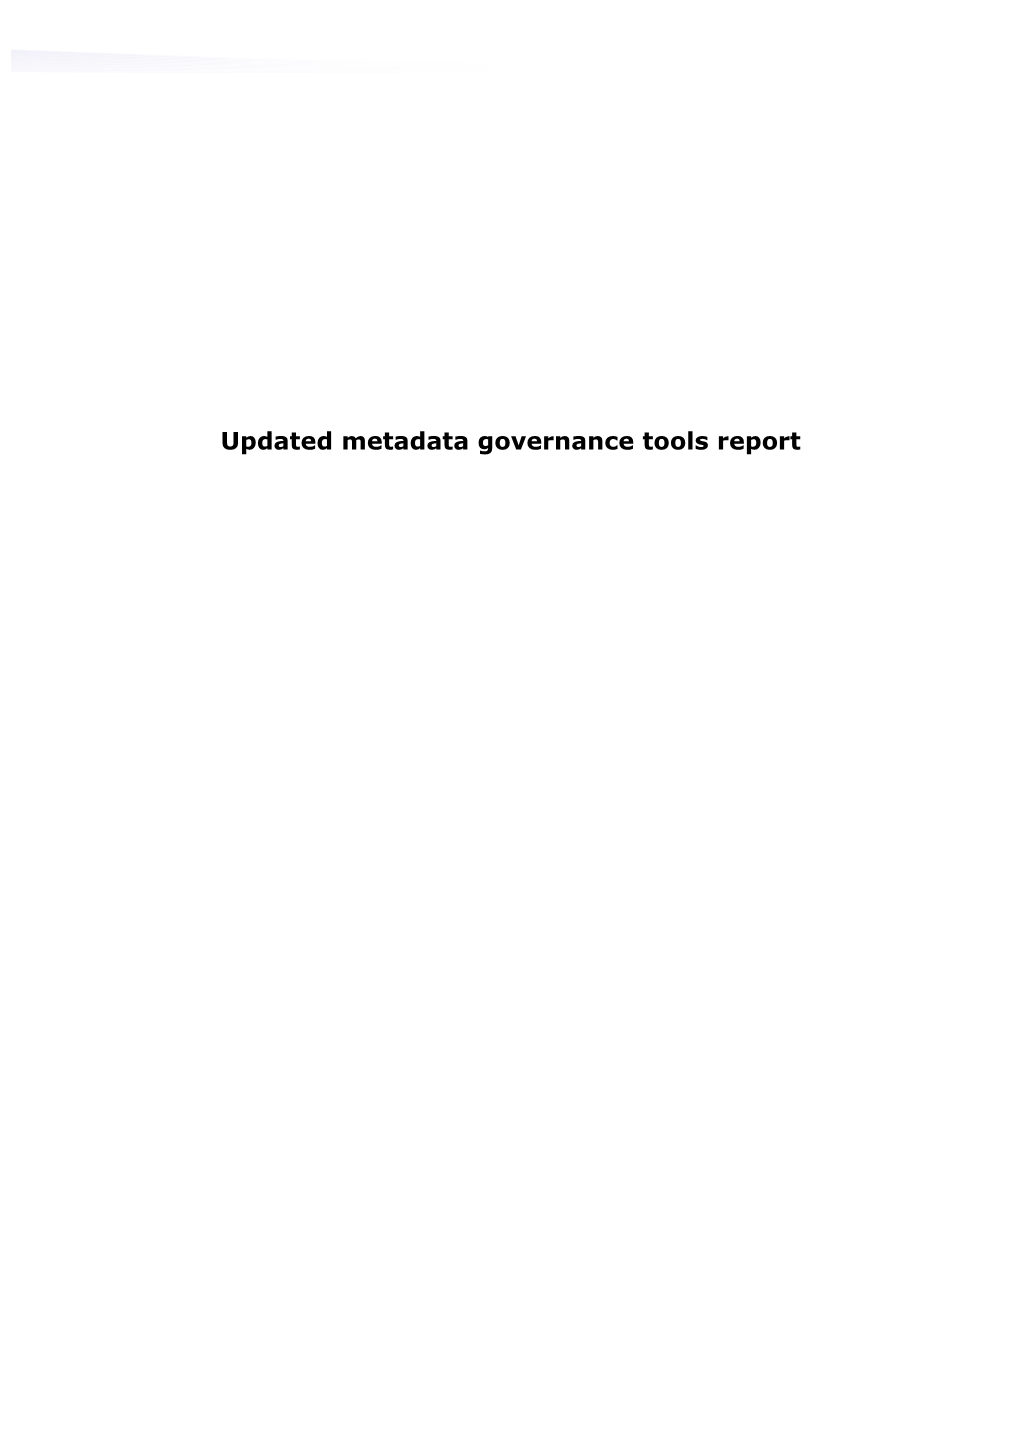 Updated Metadata Governance Tools Report